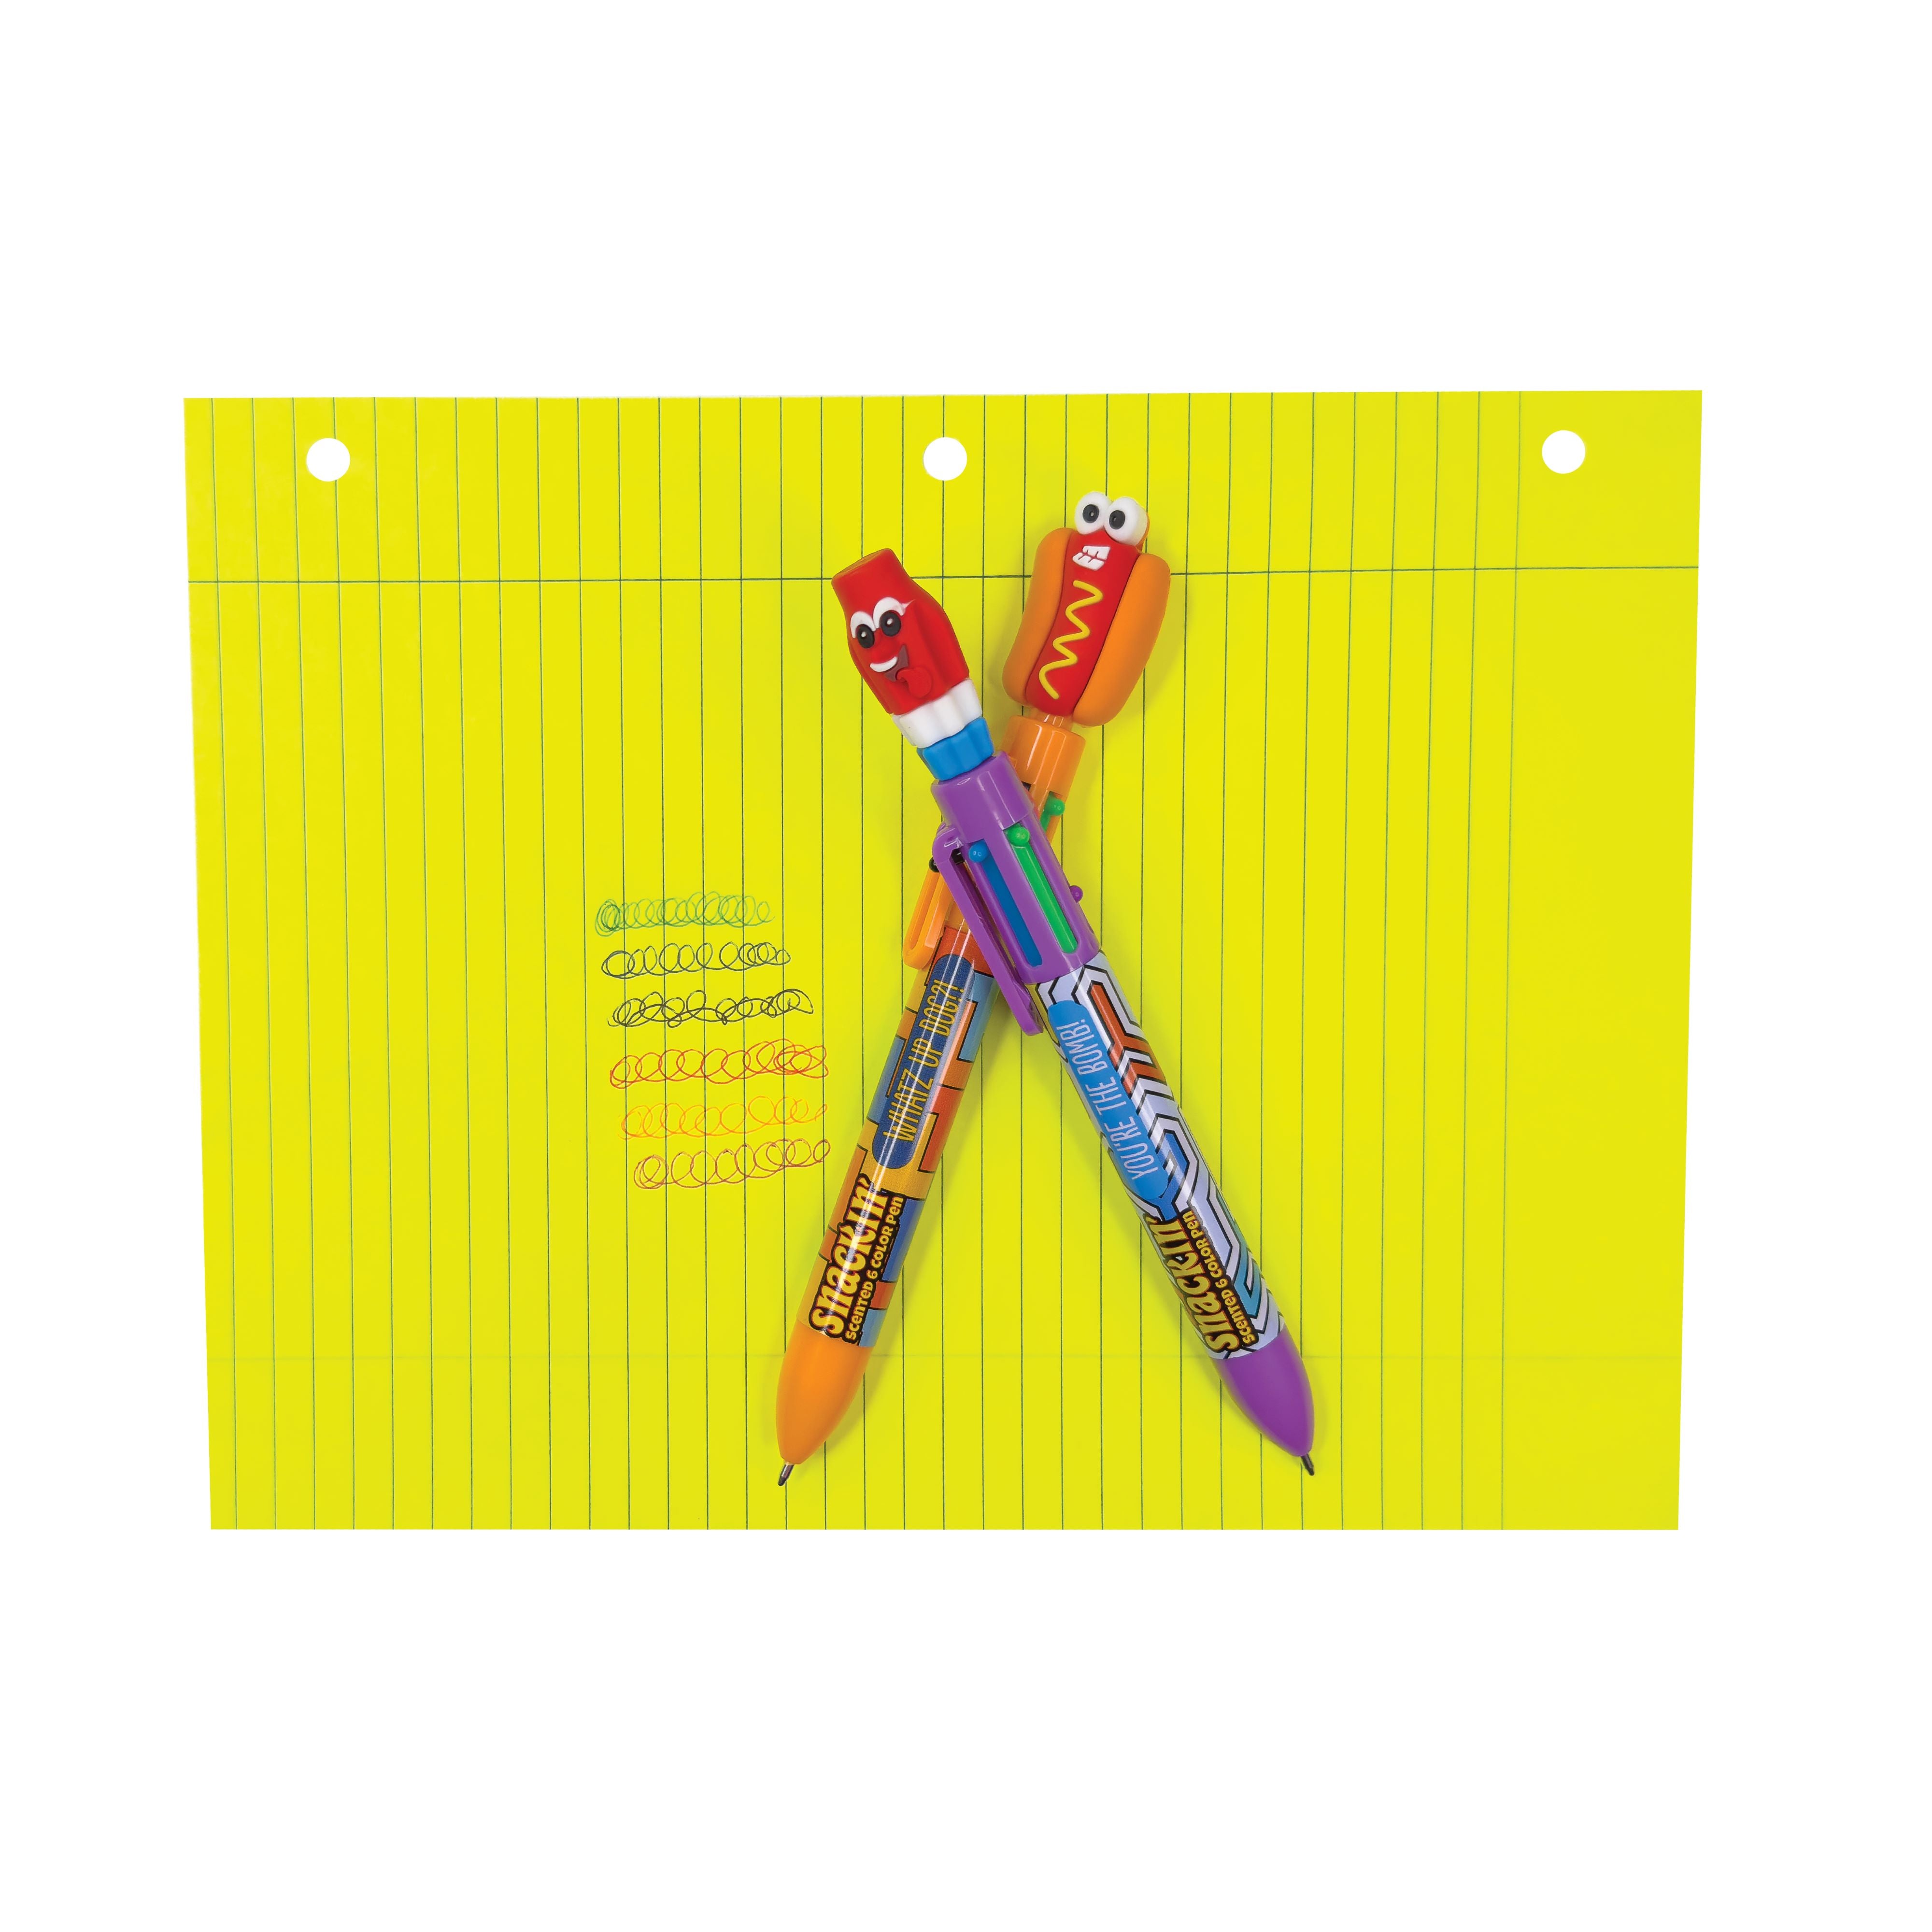 Scent-Sibles Scented 6-Color Pen Case Pack 48